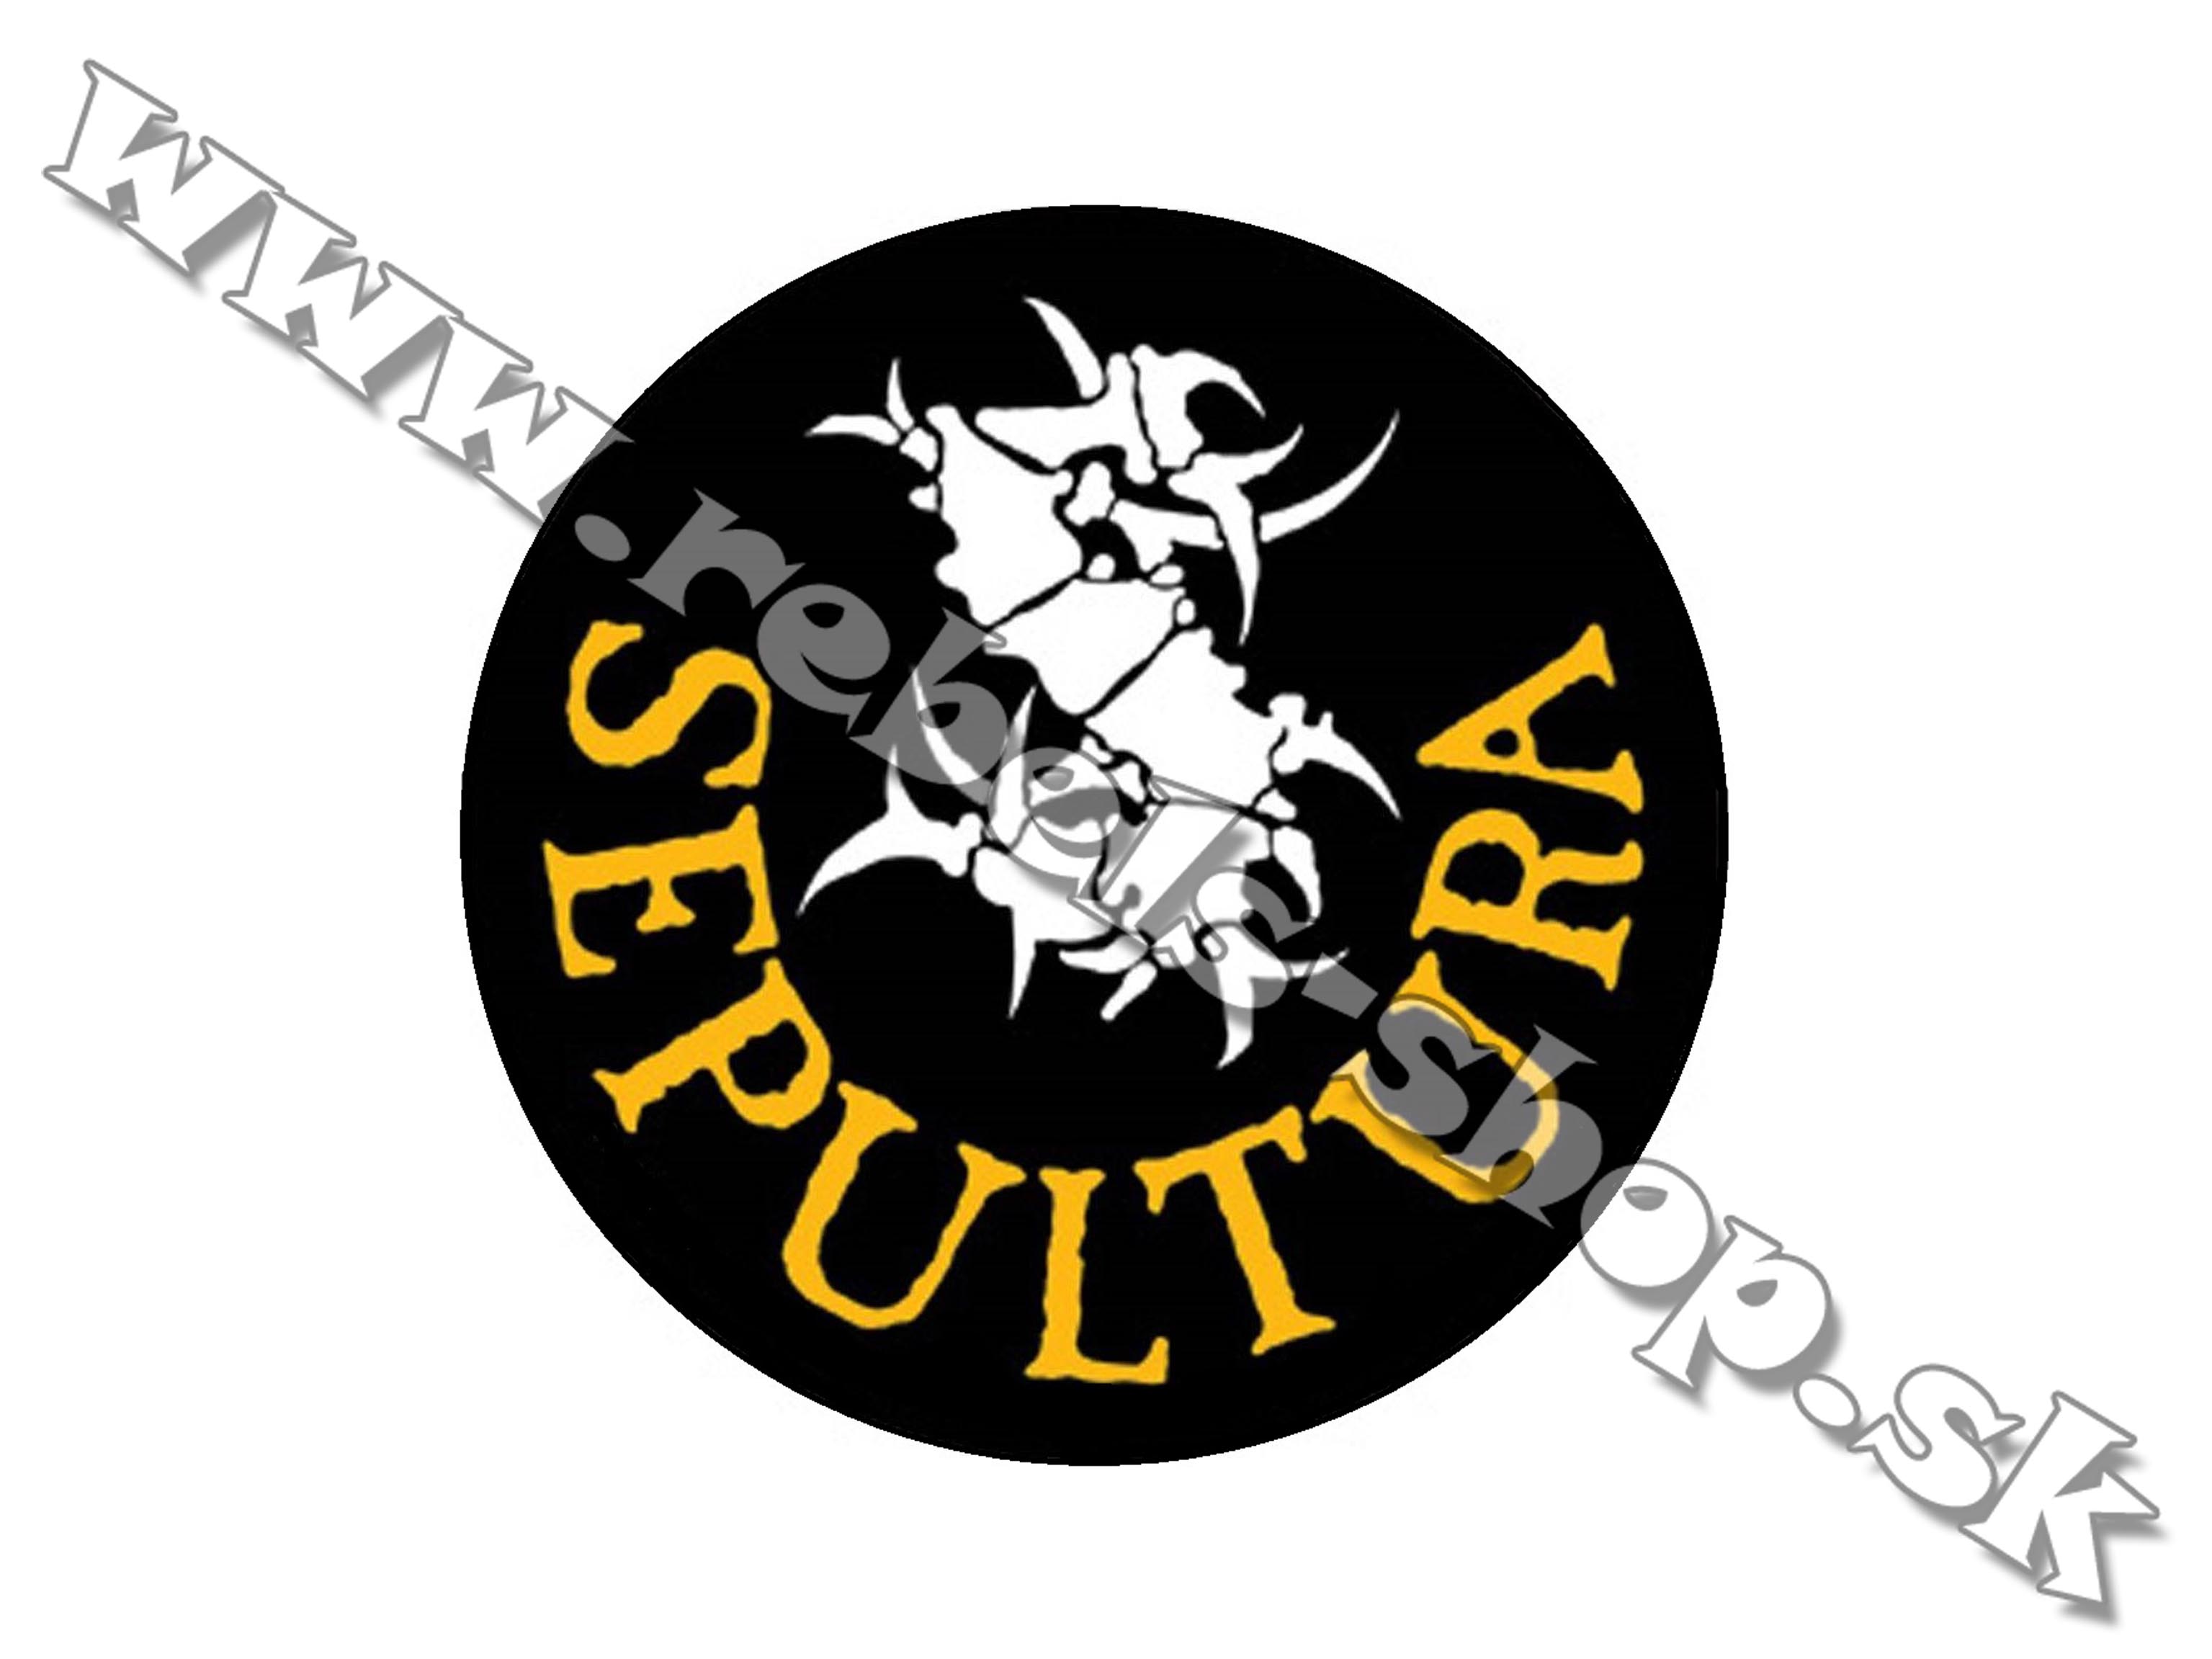 Odznak "Sepultura"